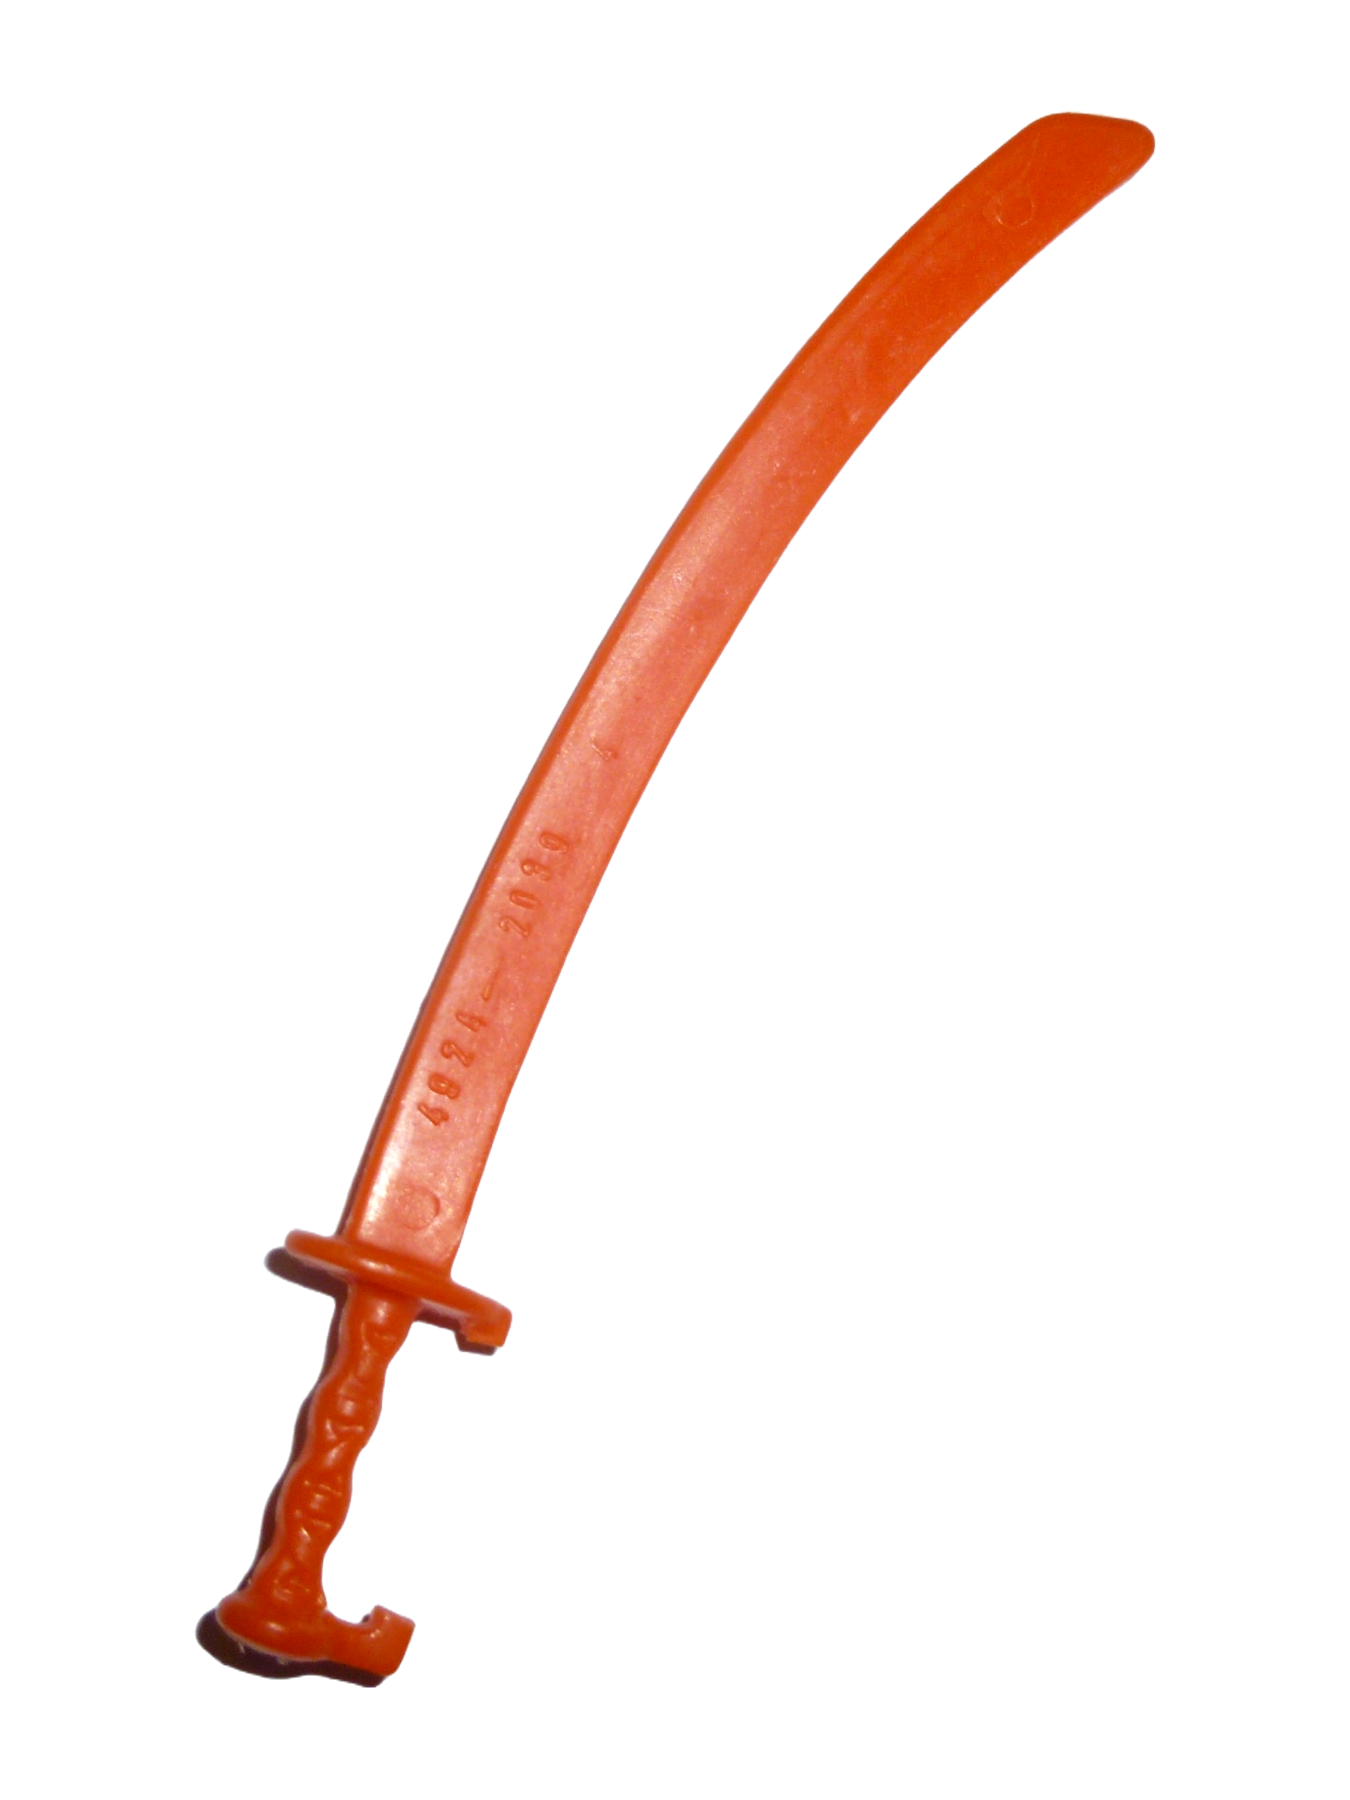 Jitsu sword / weapon